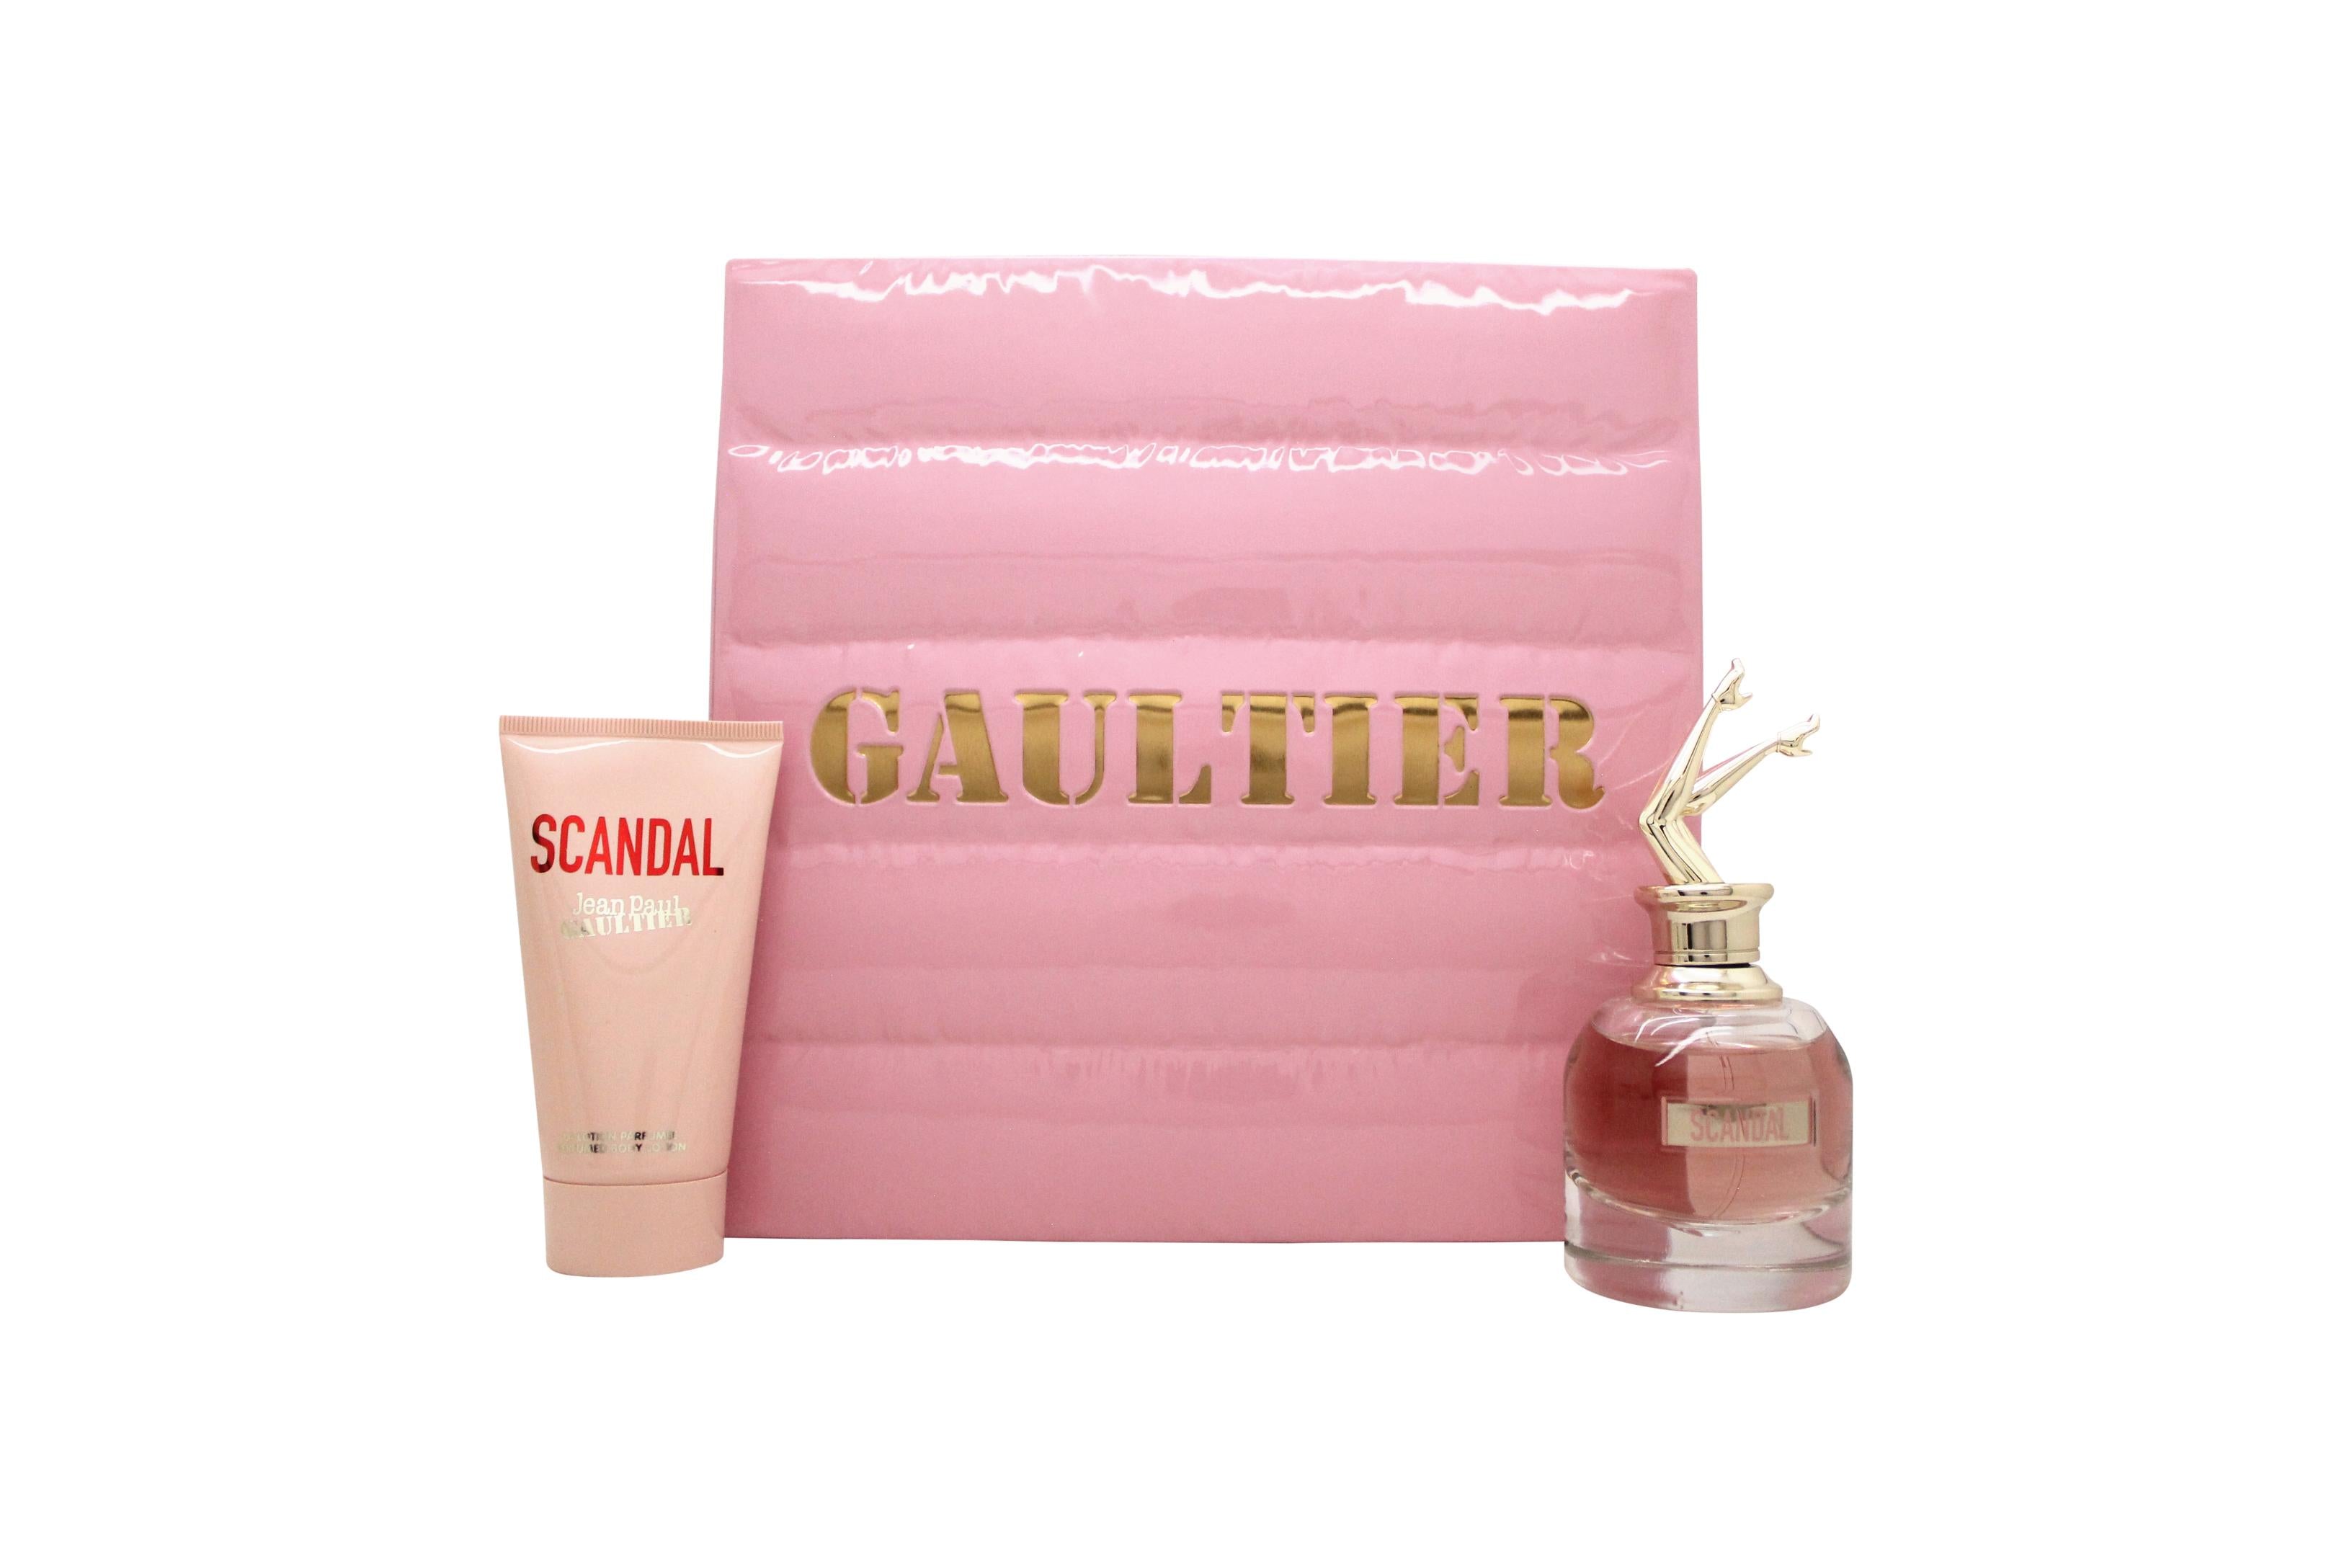 View Jean Paul Gaultier Scandal Gift Set 50ml EDP 75ml Body Lotion information